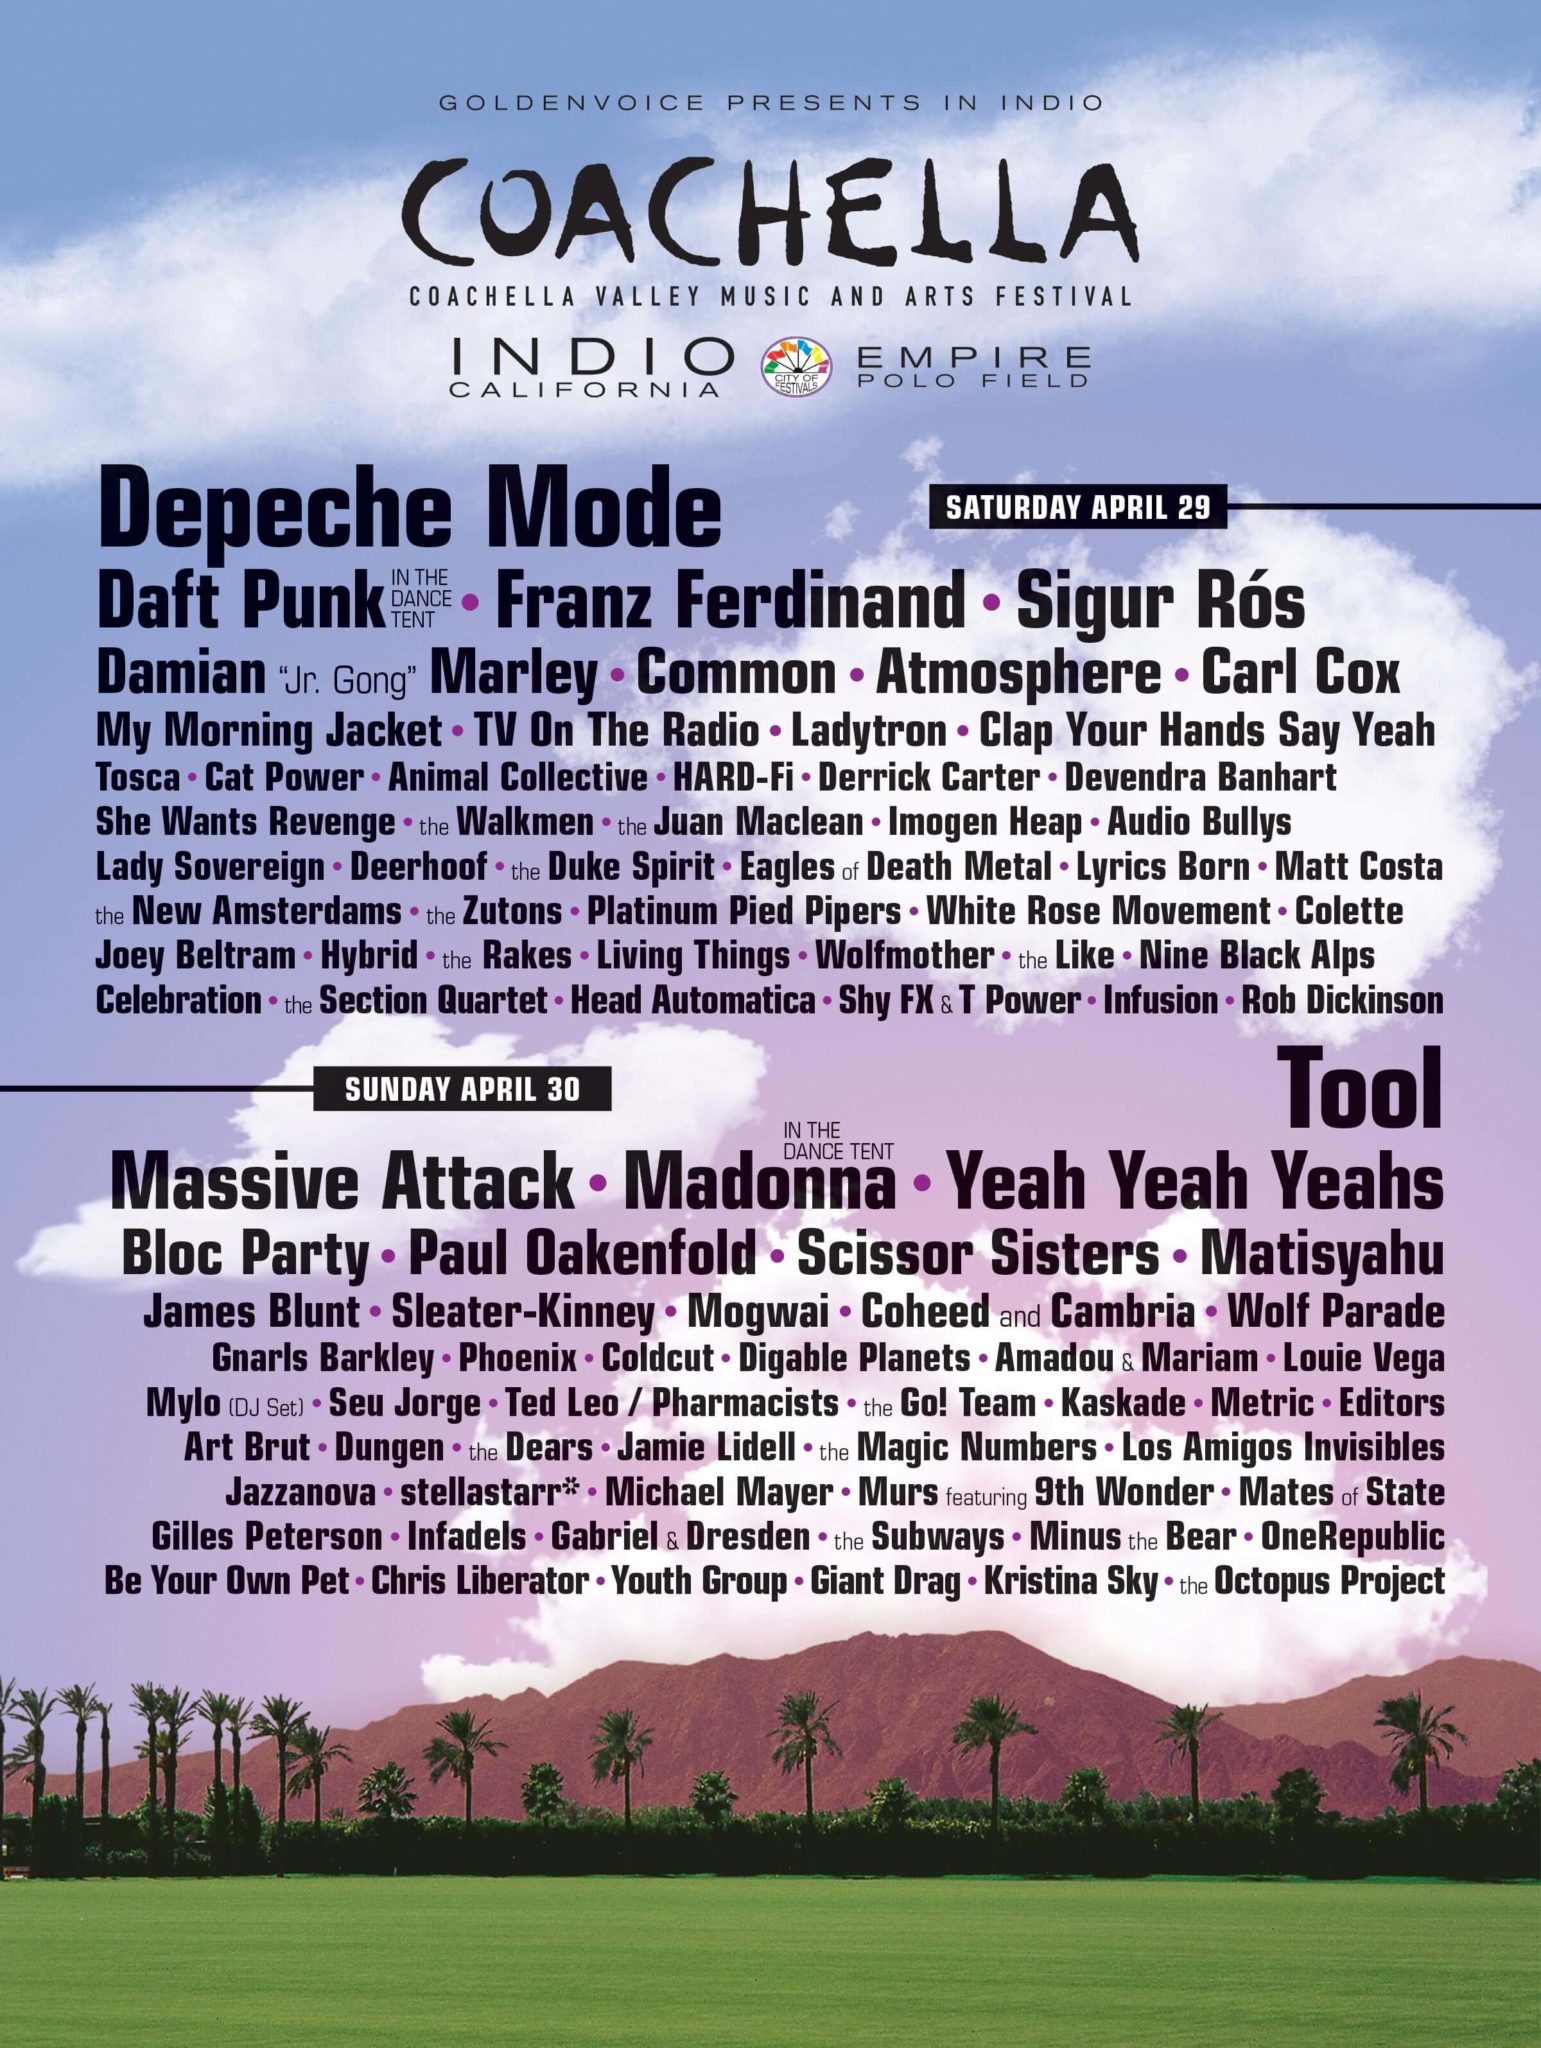 Coachella 2006 Lineup Announced!